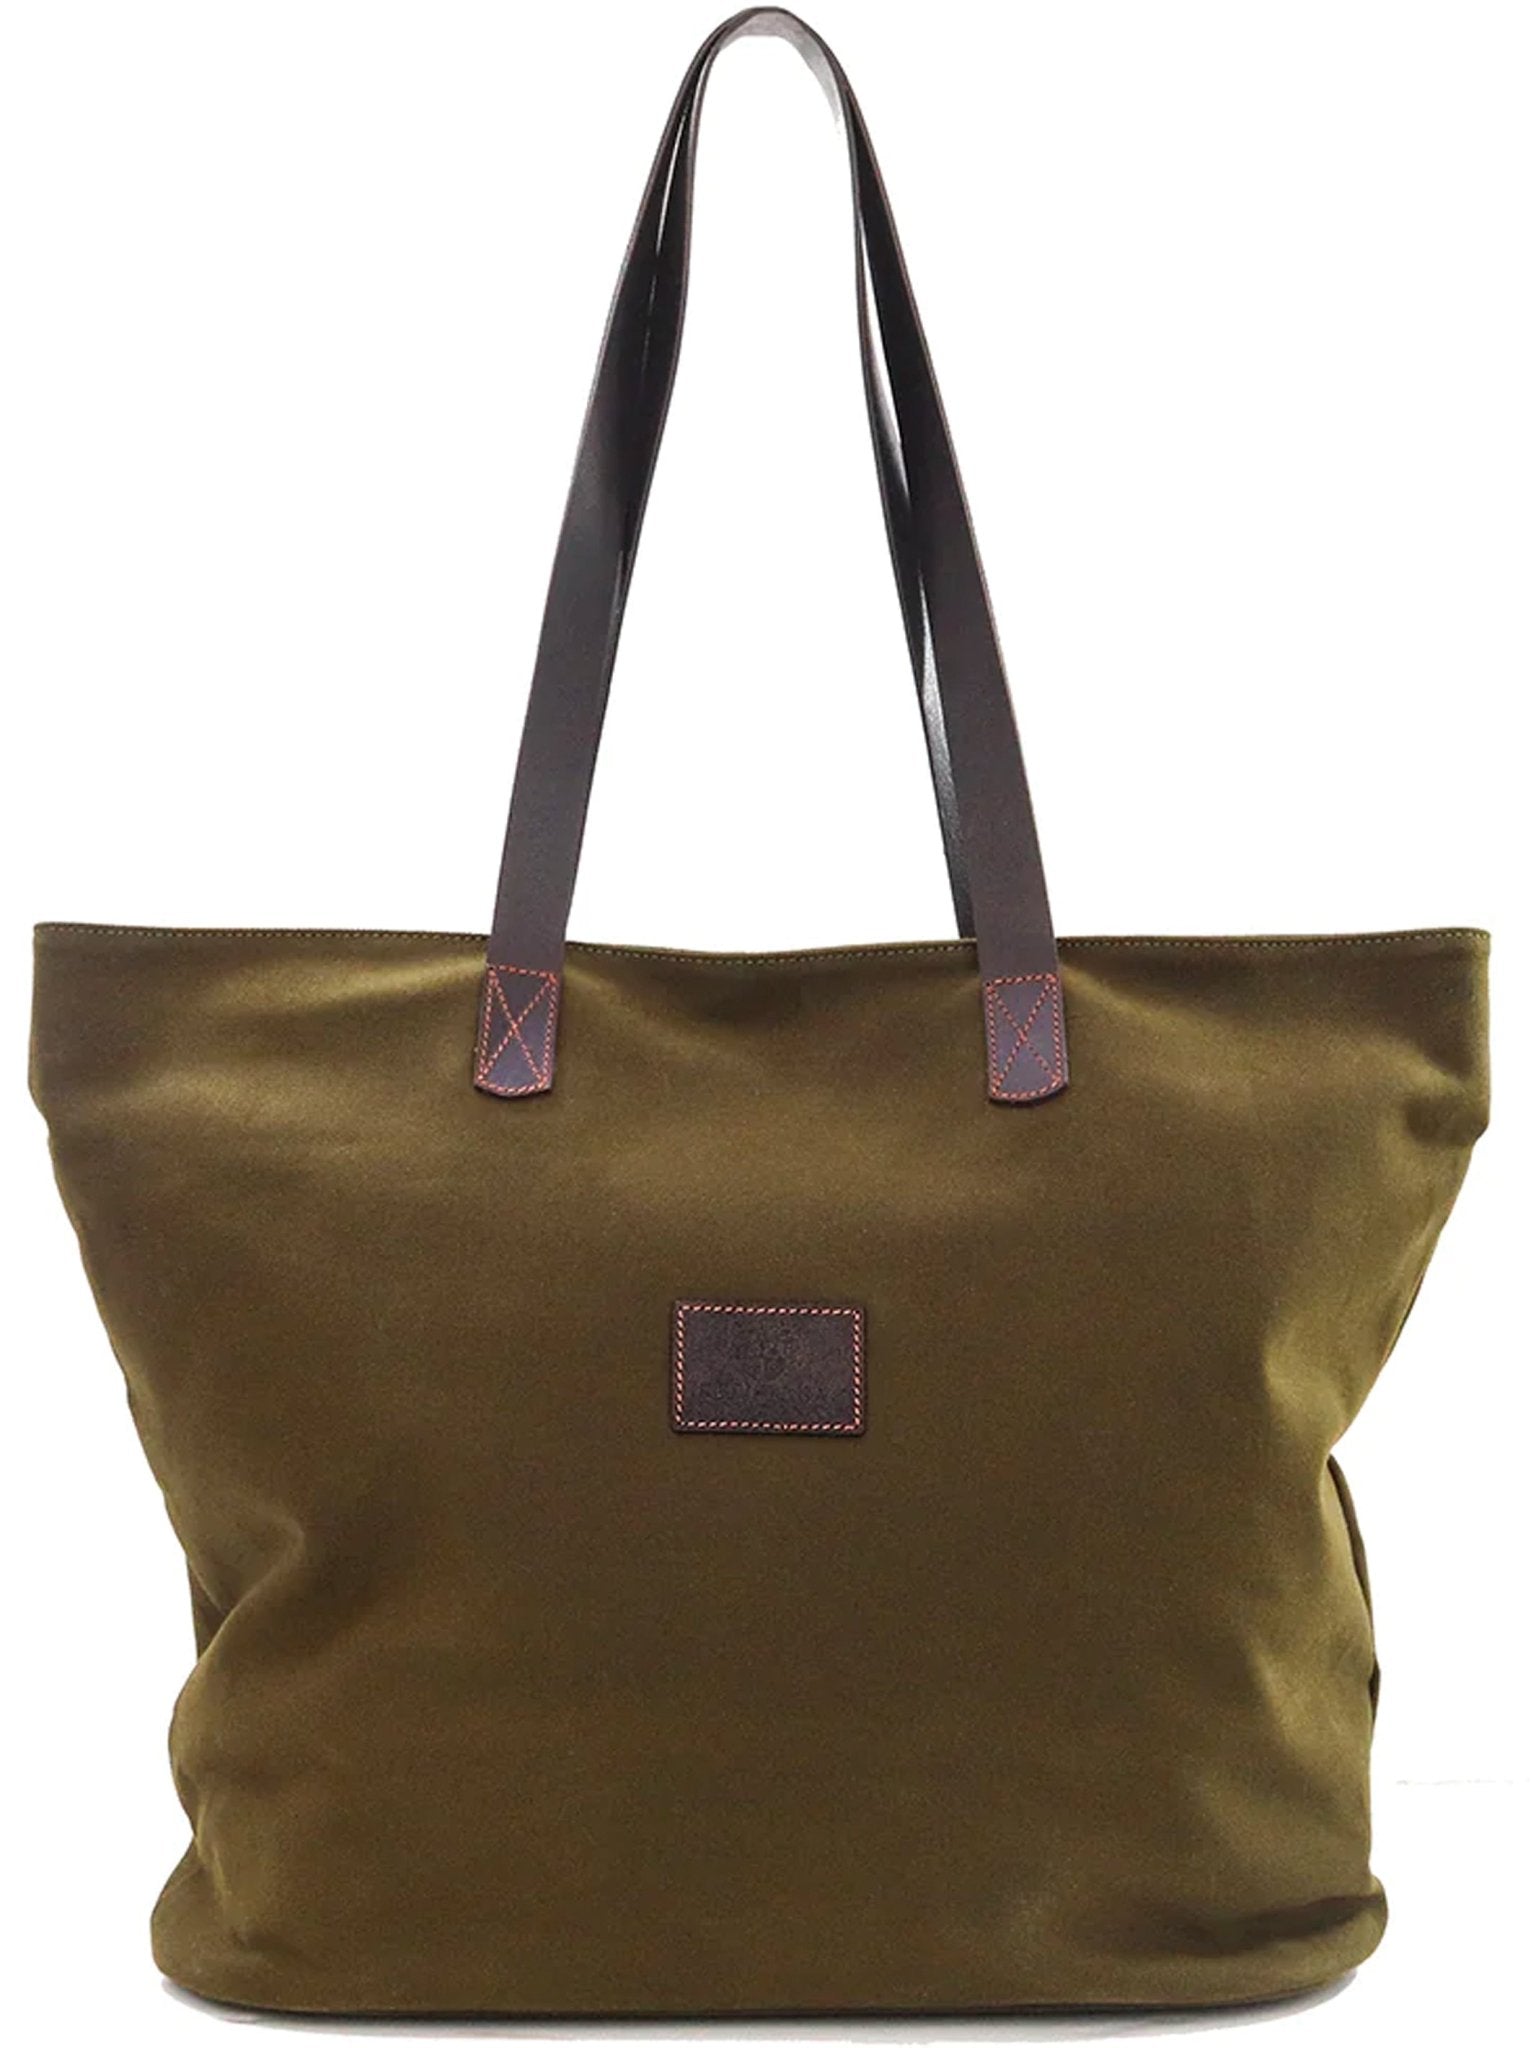 4elementsclothingThe British Bag CompanyBritish Bag Company - Waxed Canvas Tote Bag - Premium weight leather trim tote bagBag710352